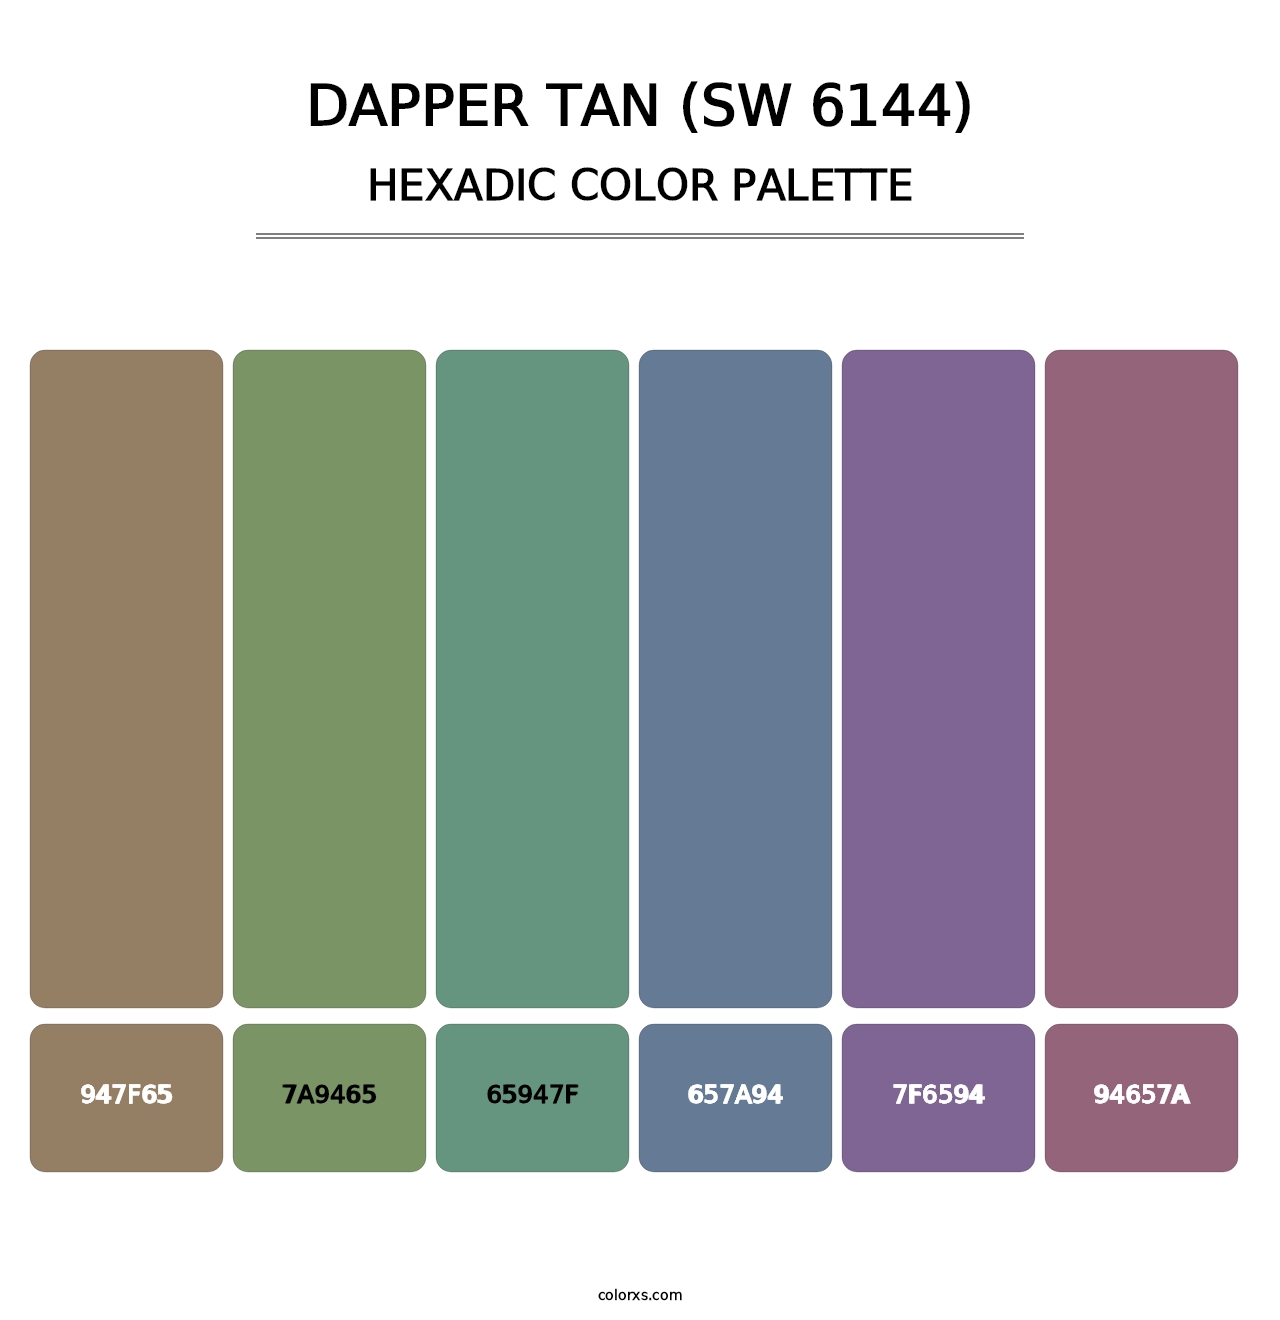 Dapper Tan (SW 6144) - Hexadic Color Palette